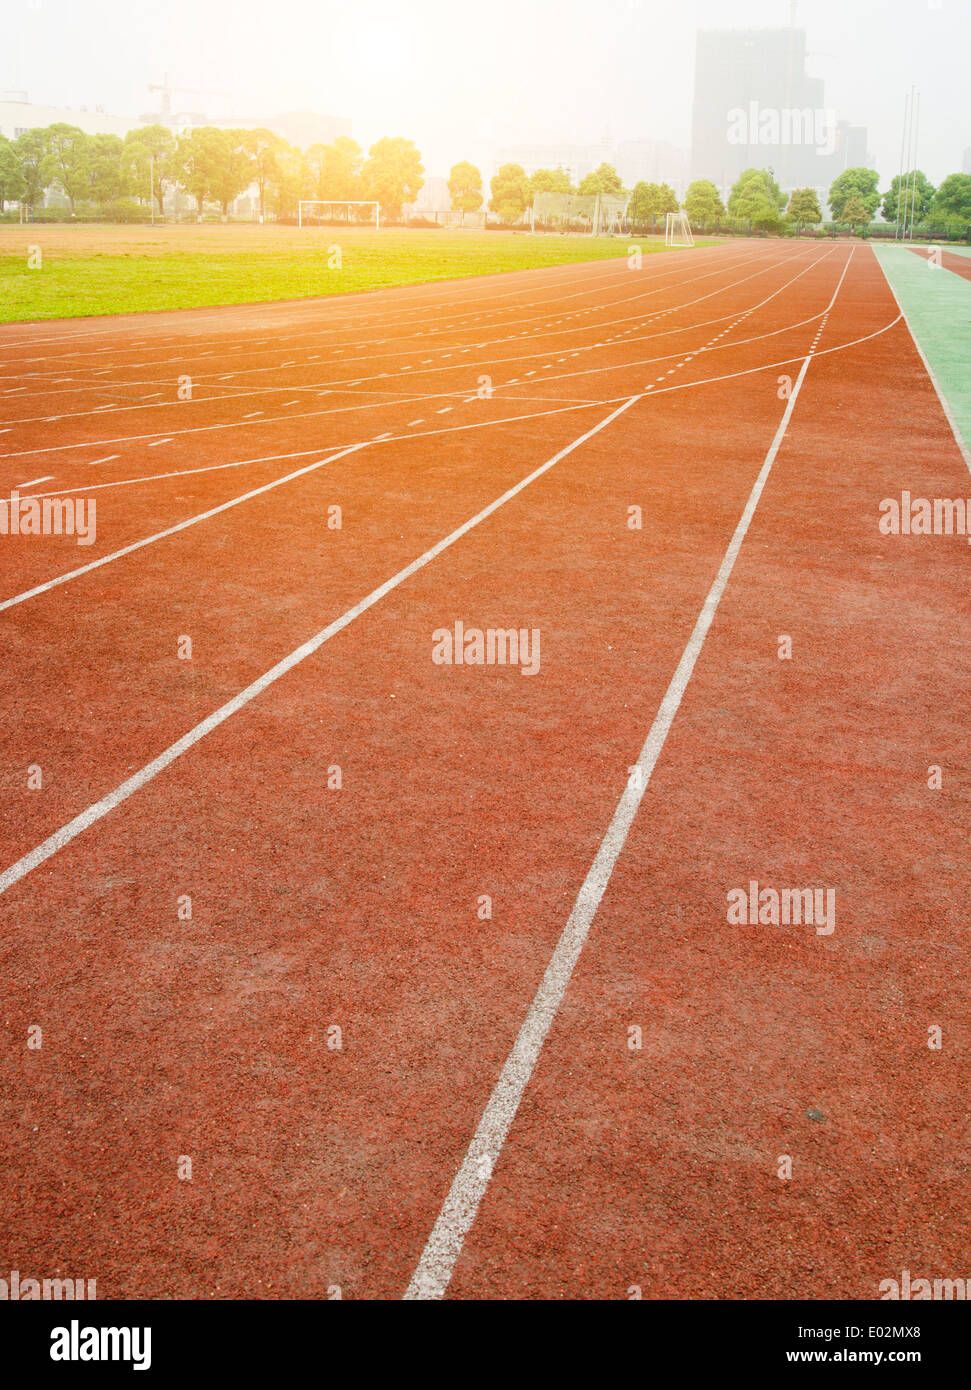 Athletics track Stock Photo